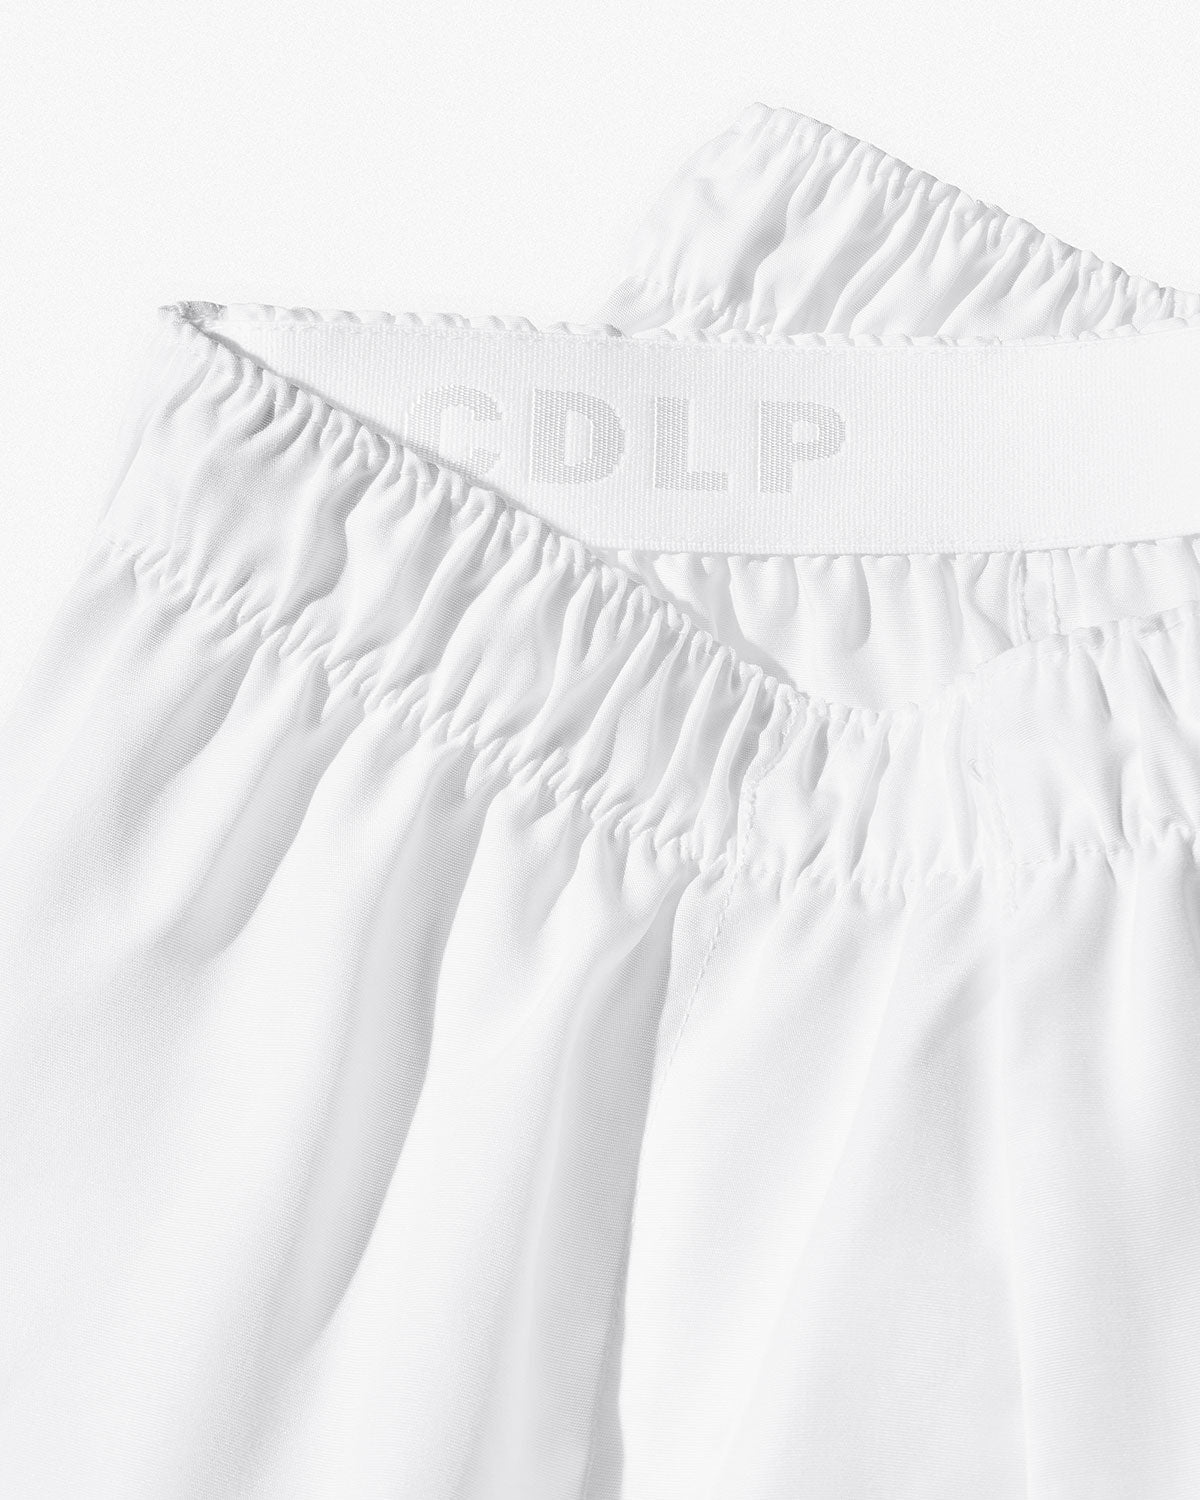 CDLP Woven Boxer Shorts Slim in White